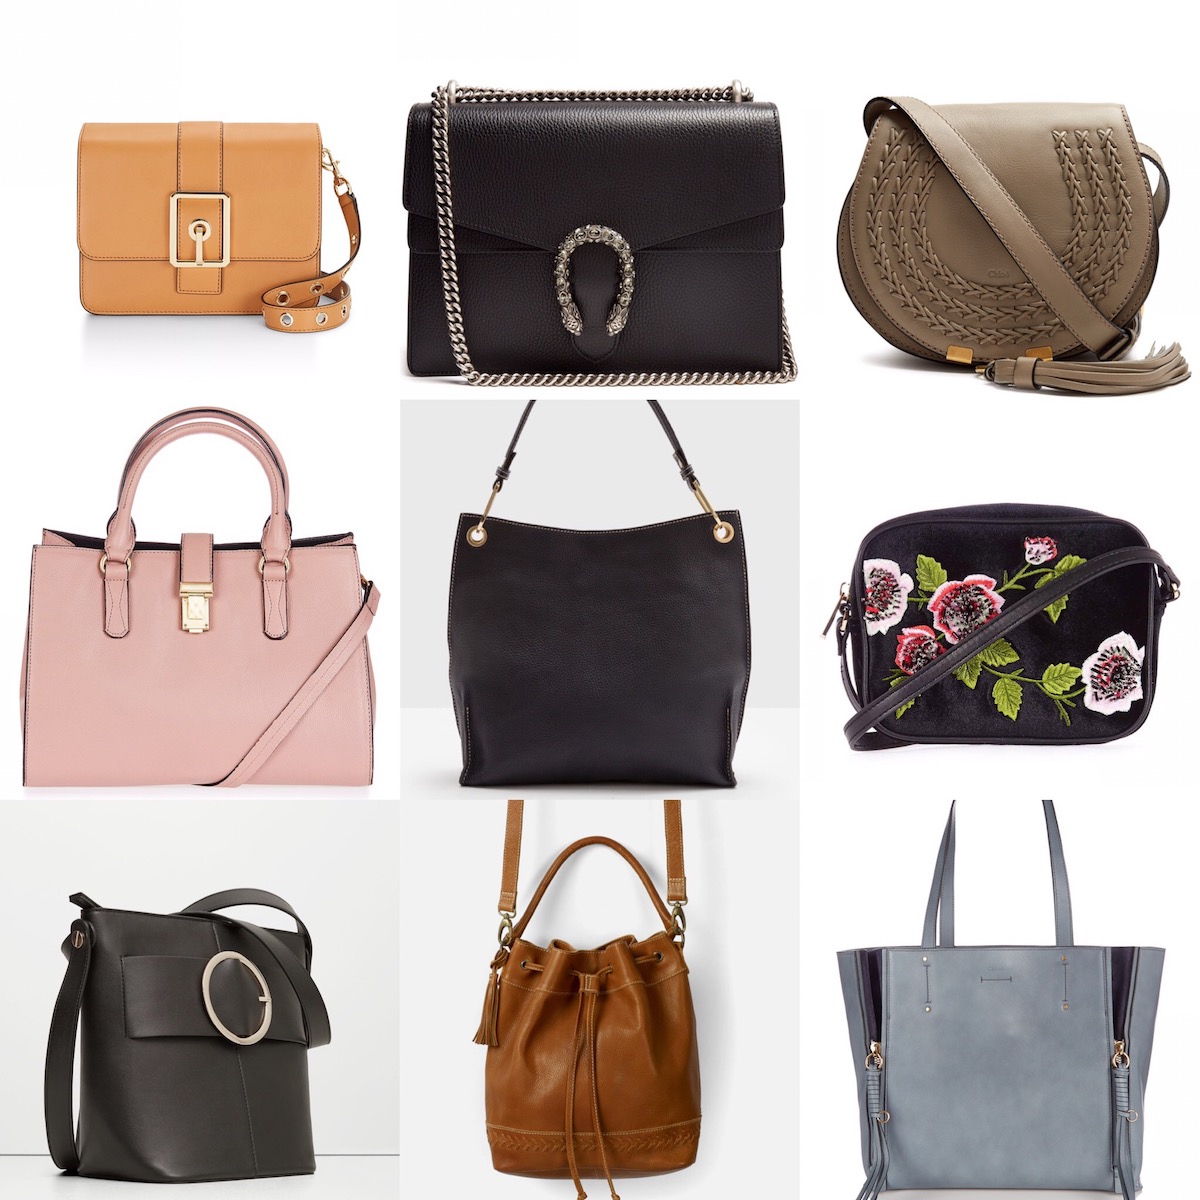 2017 Handbags For All Budgets – JacquardFlower